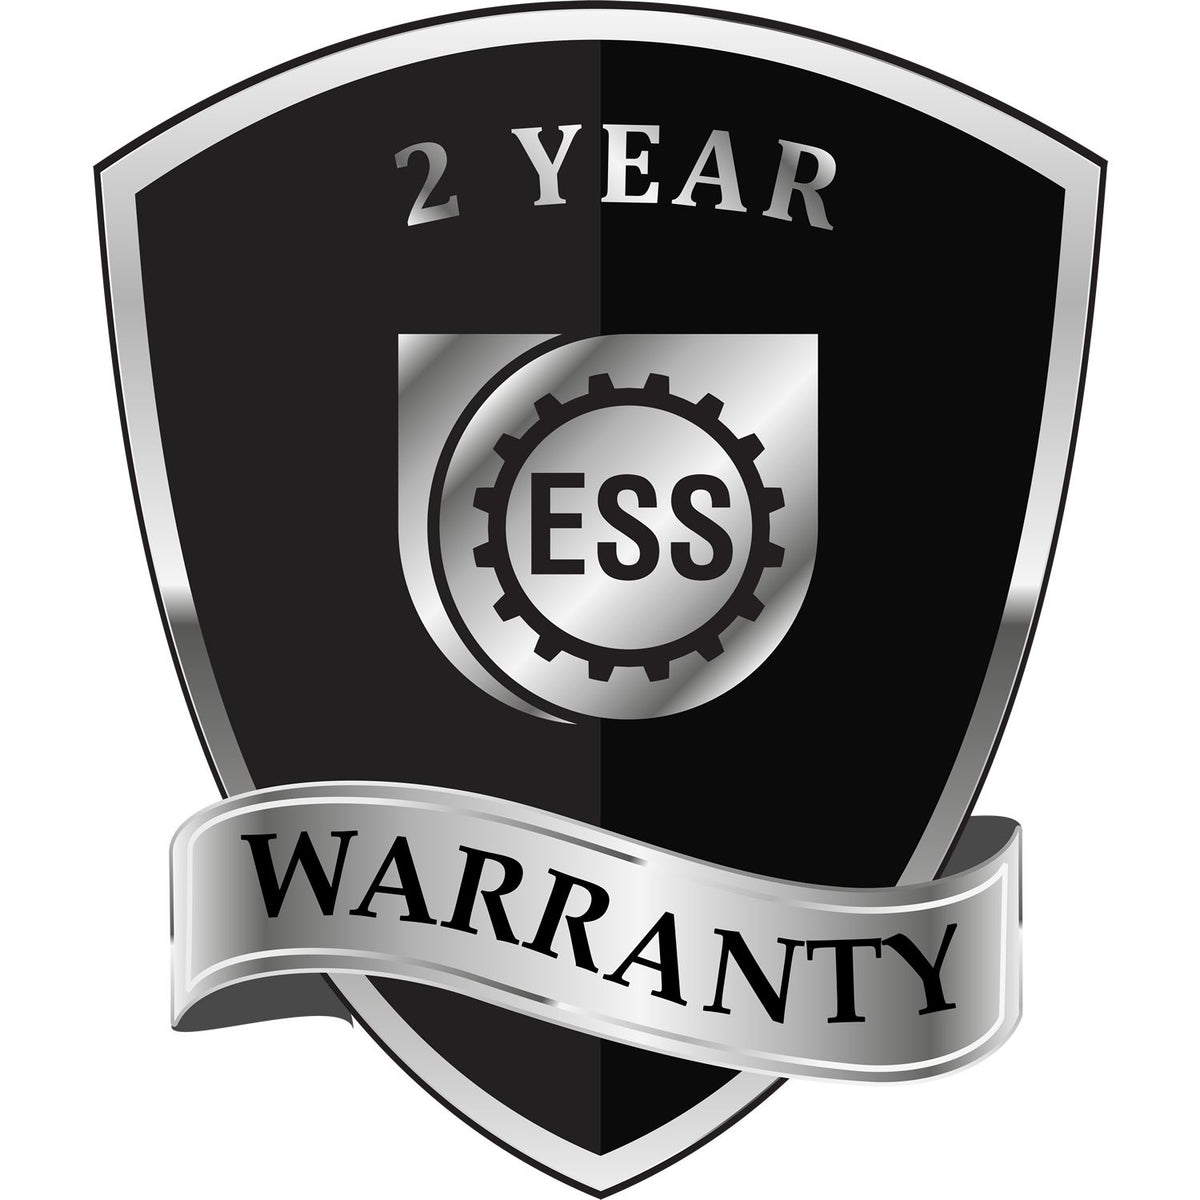 A black and silver badge or emblem showing warranty information for the Hybrid Alaska Engineer Seal